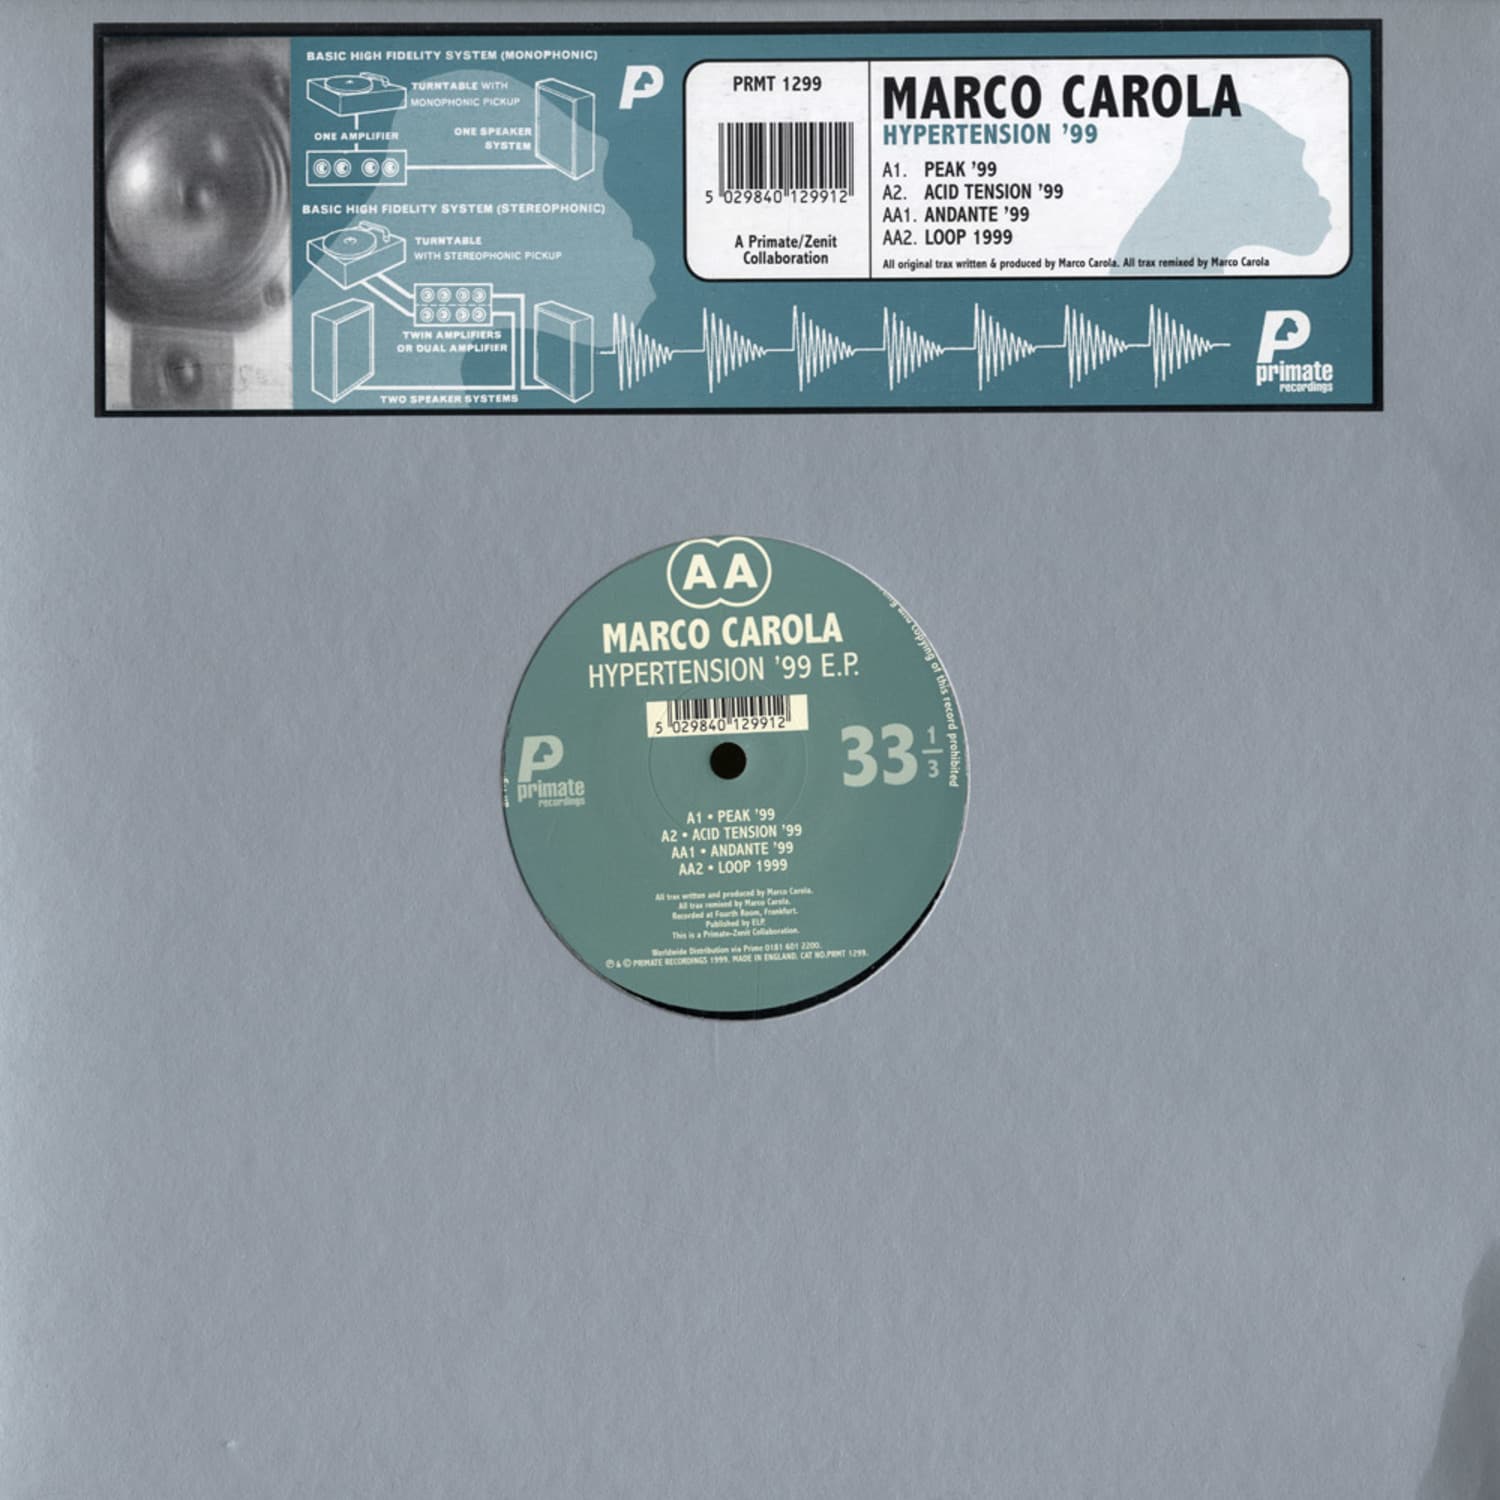 Marco Carola - HYPERTENSION 99